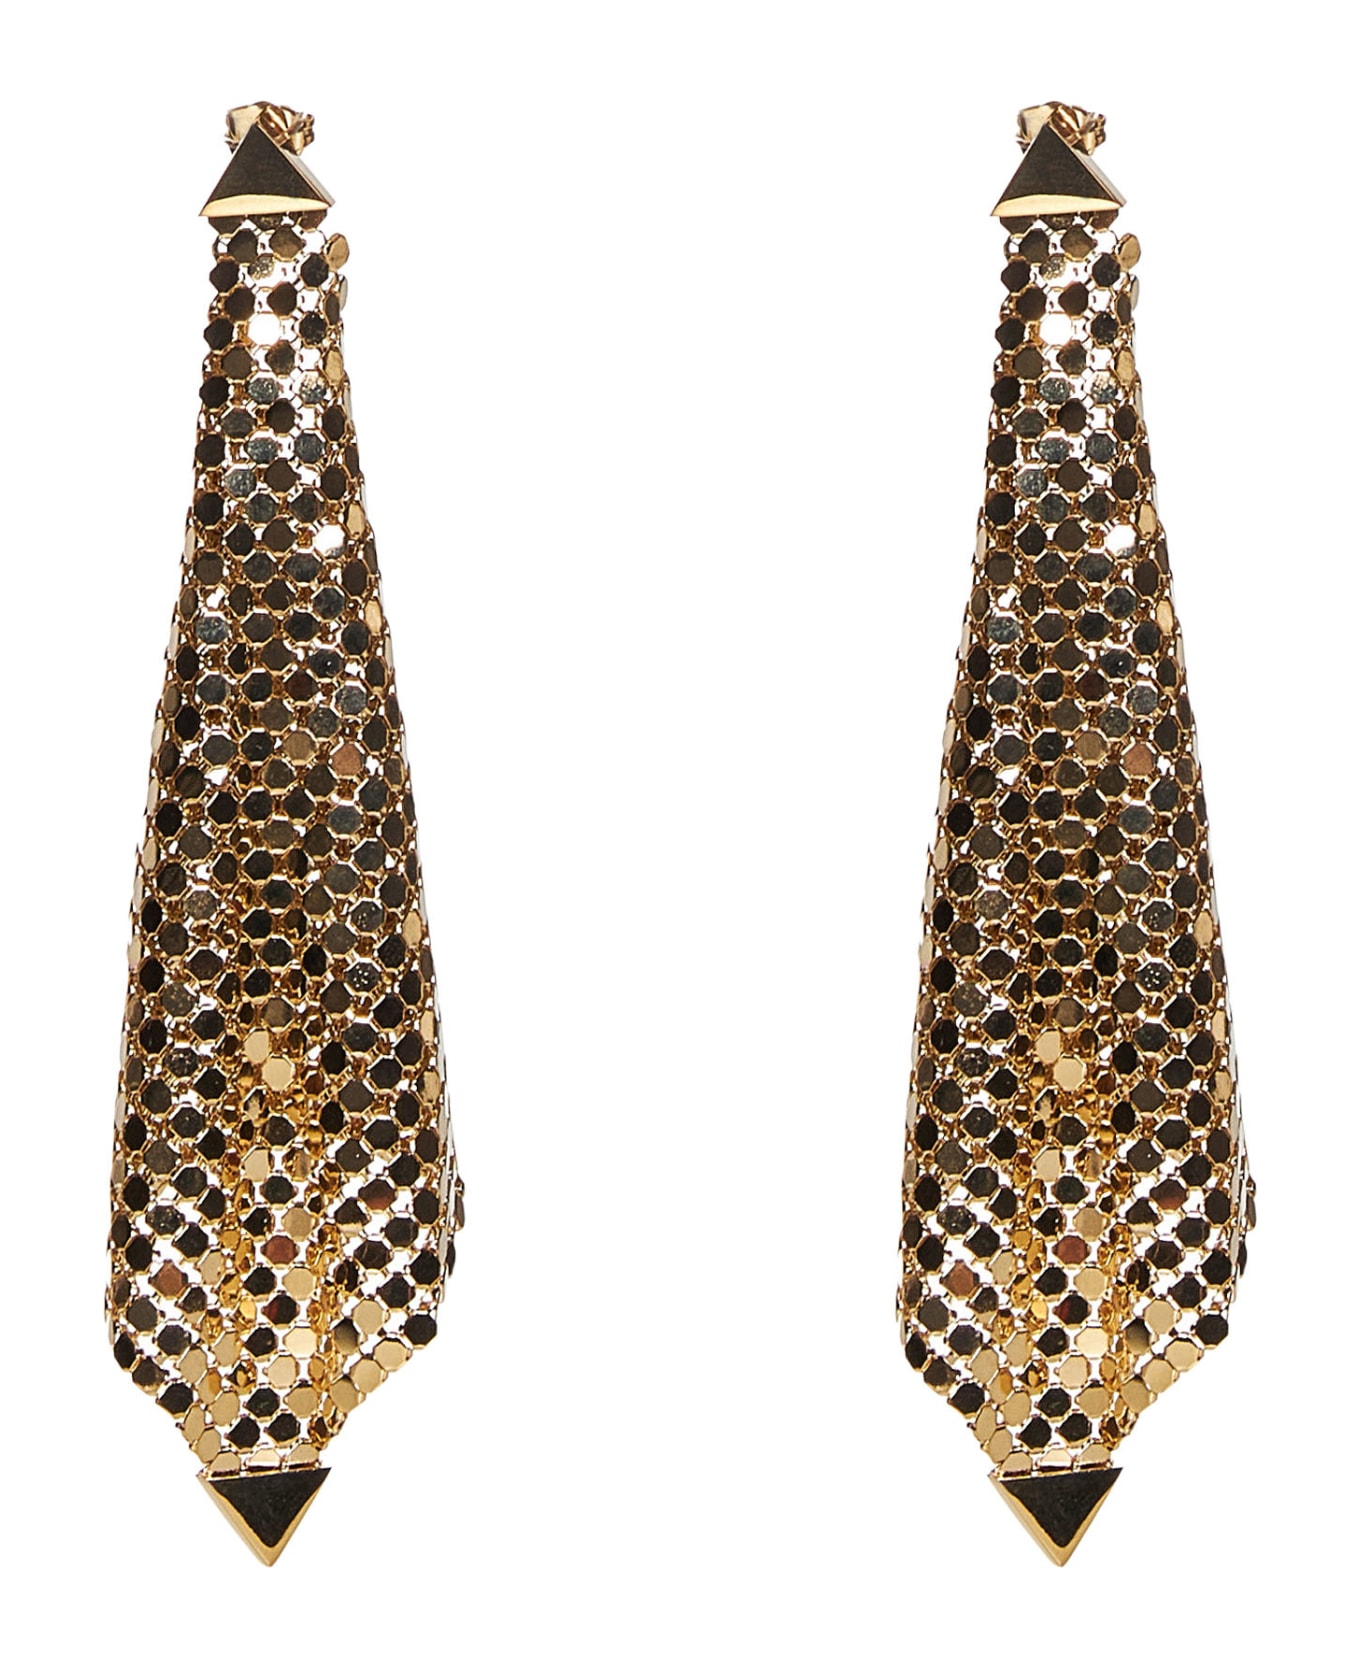 Paco Rabanne Earrings - Golden